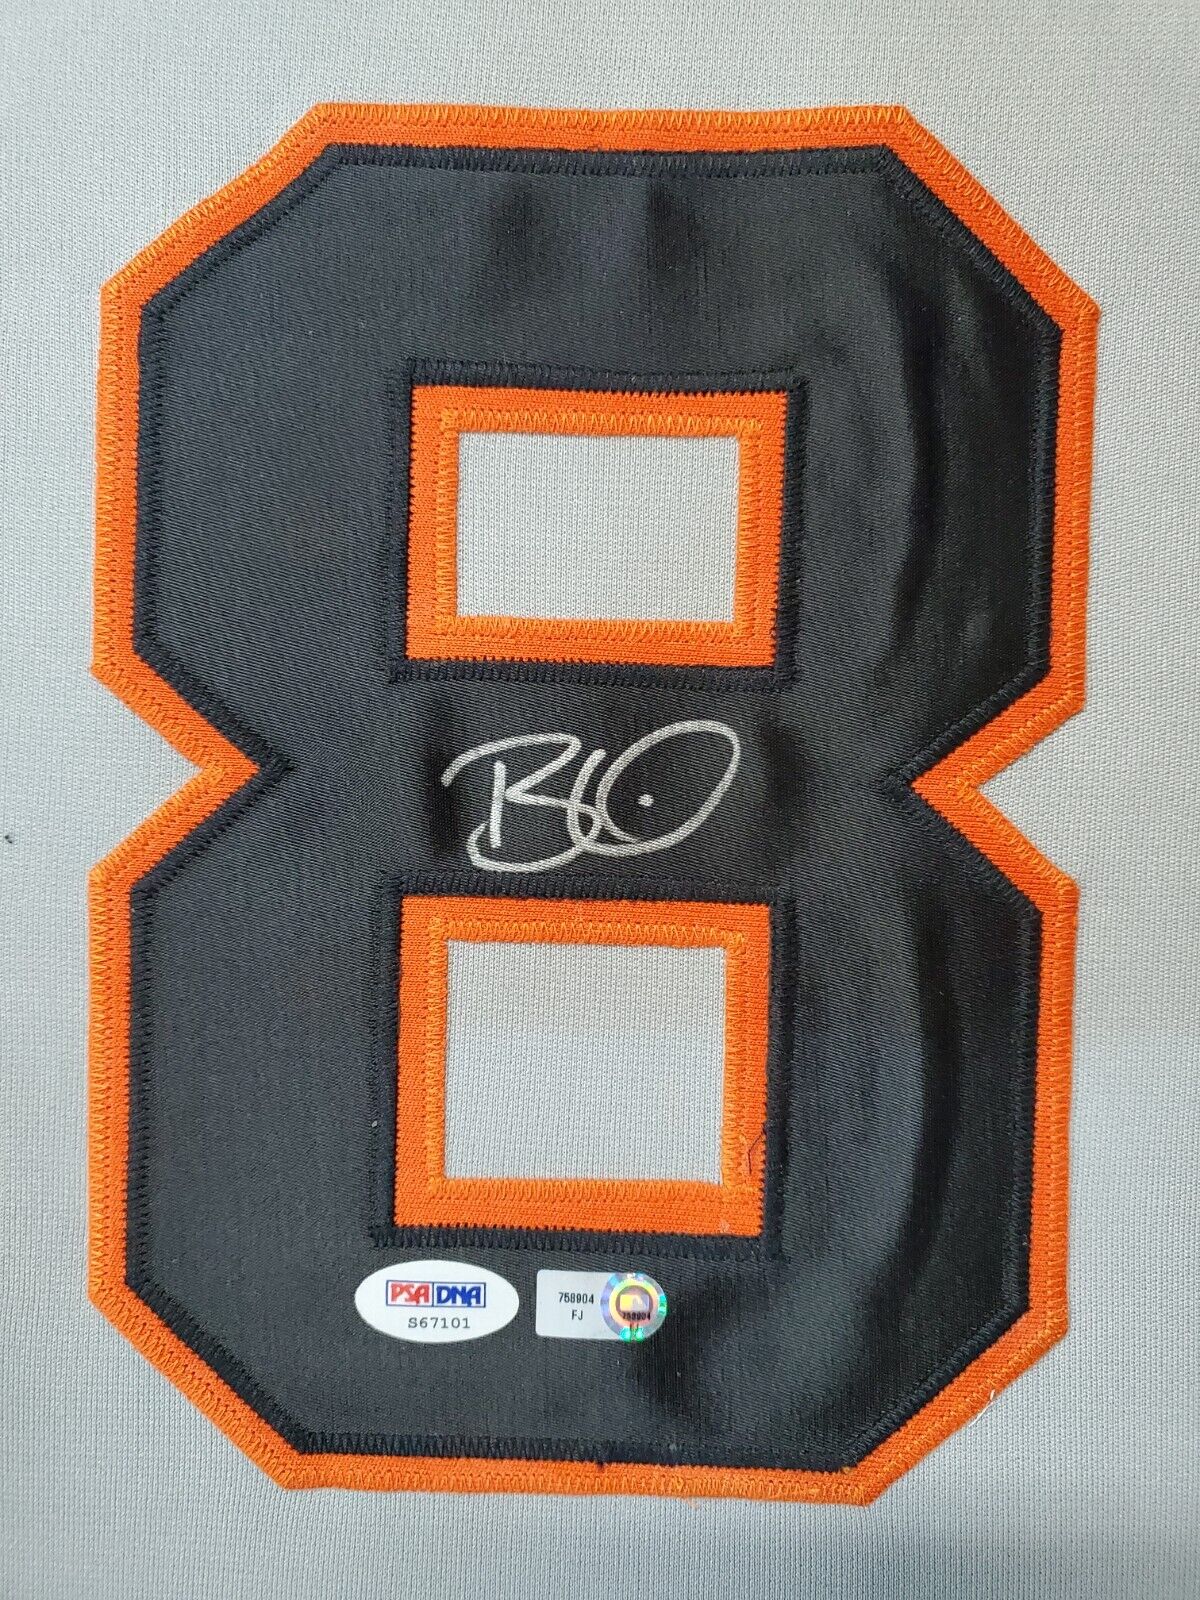 MVP Authentics Framed San Francisco Giants Brian Wilson Autographed Signed Jersey Psn/Dna Coa 900 sports jersey framing , jersey framing